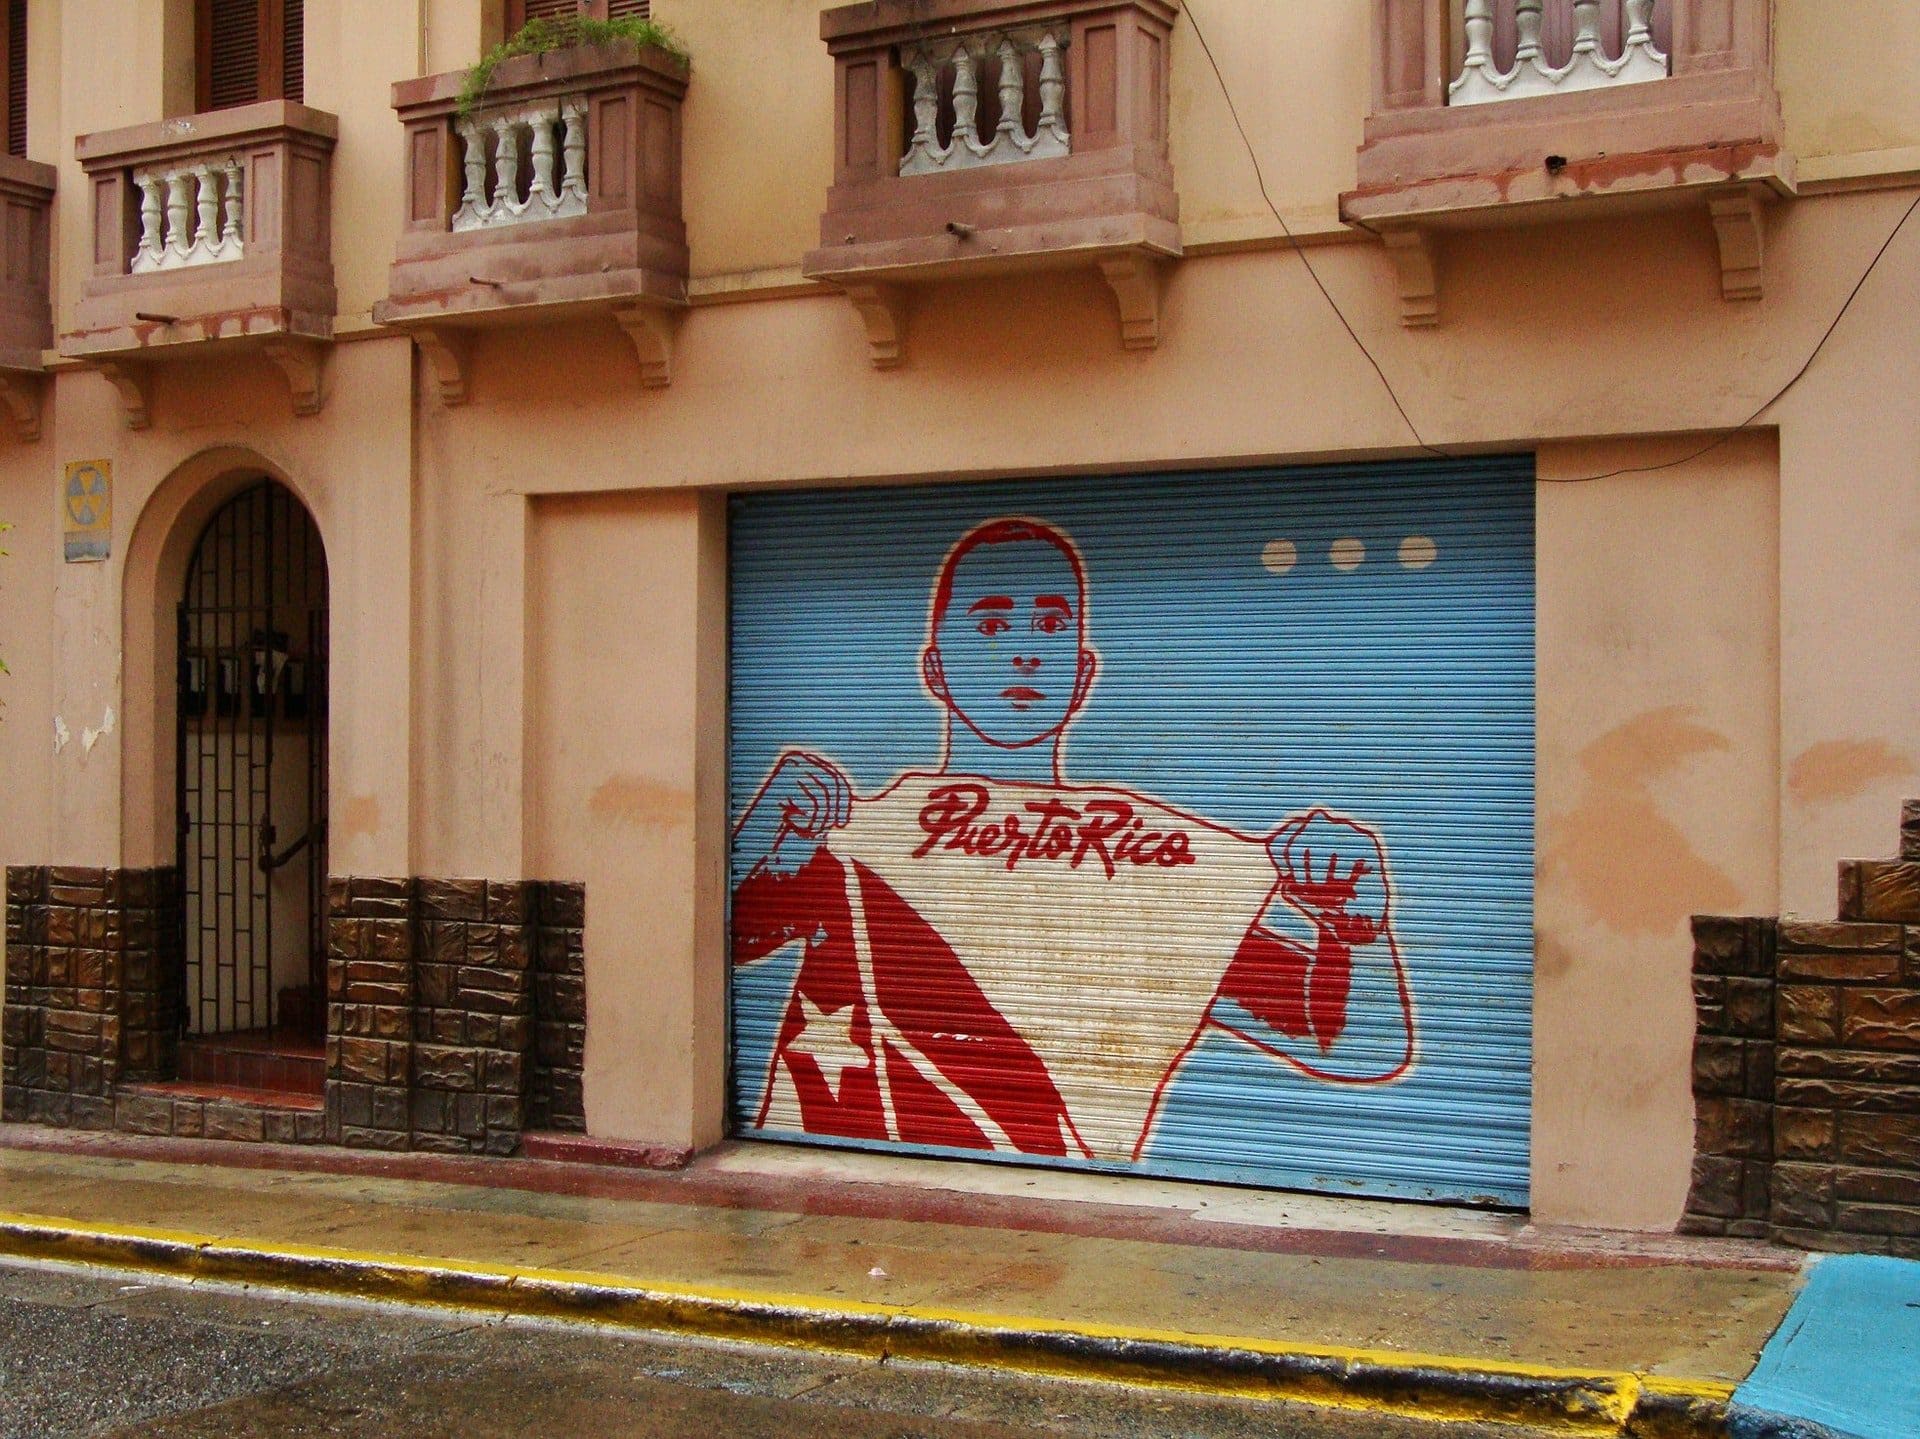 Photo of Puerto Rico street by Elizabeth Mosaidis for Unsplash